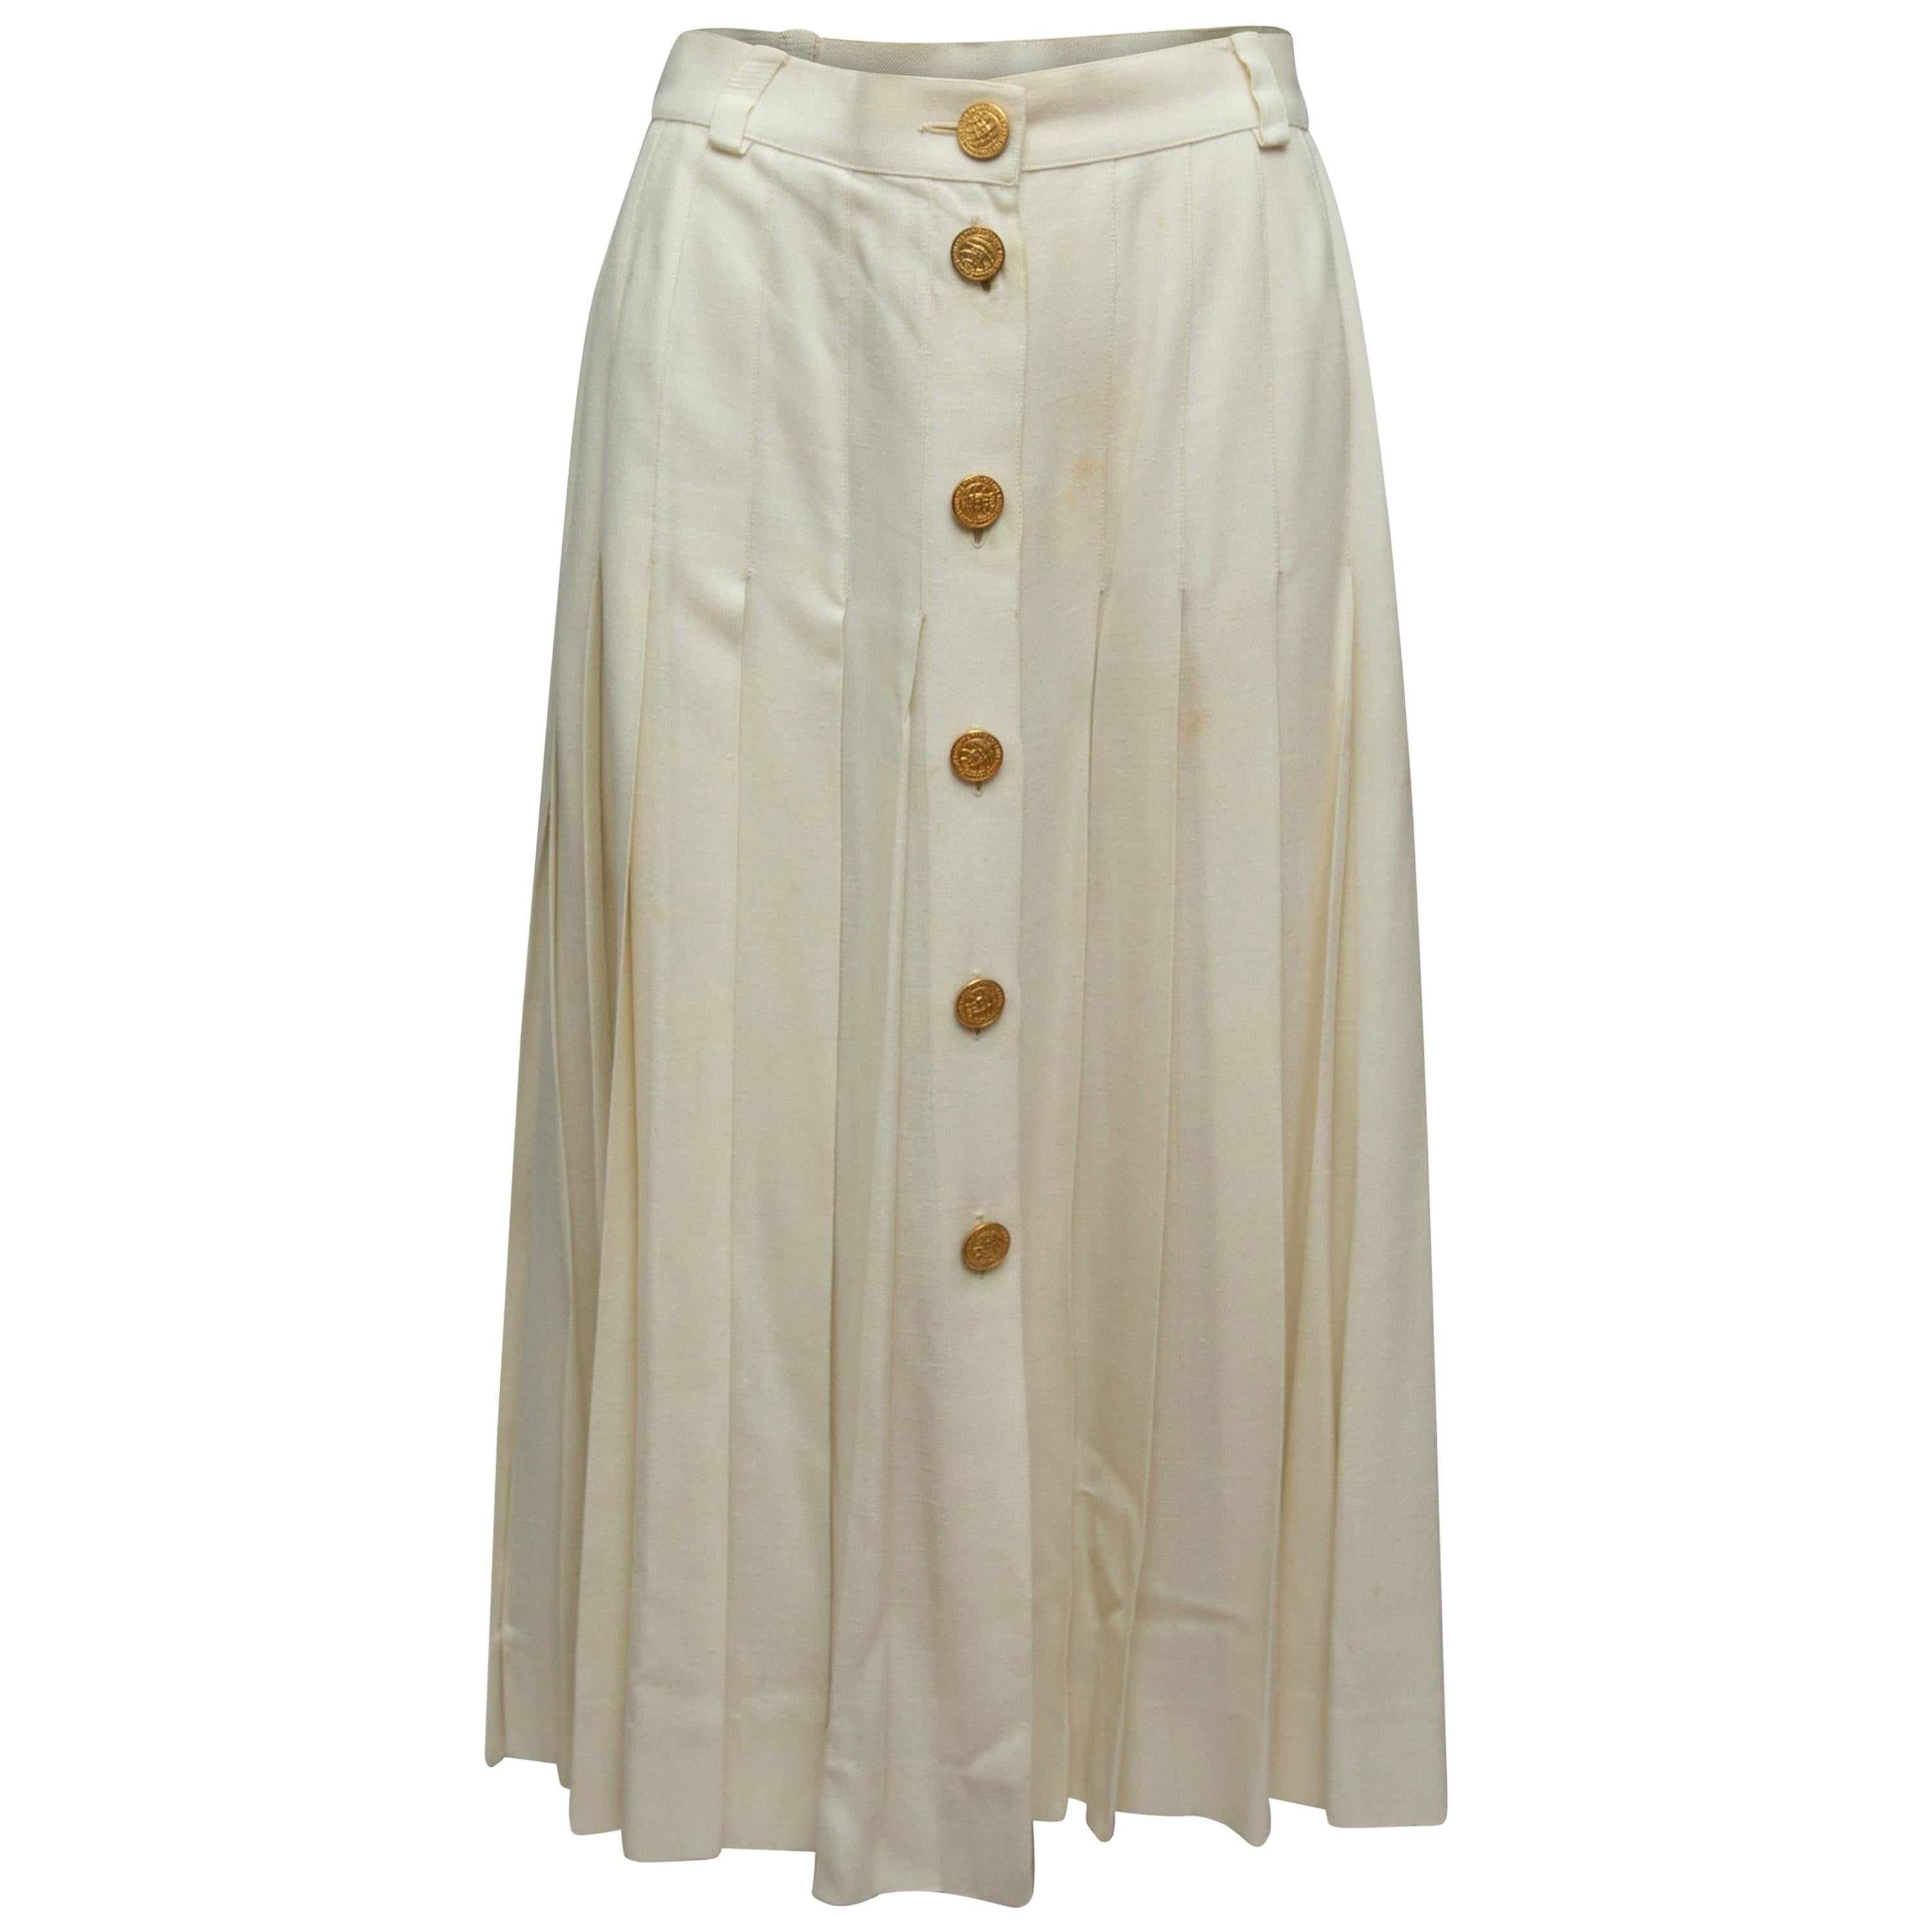 Celine White Button Midi Skirt